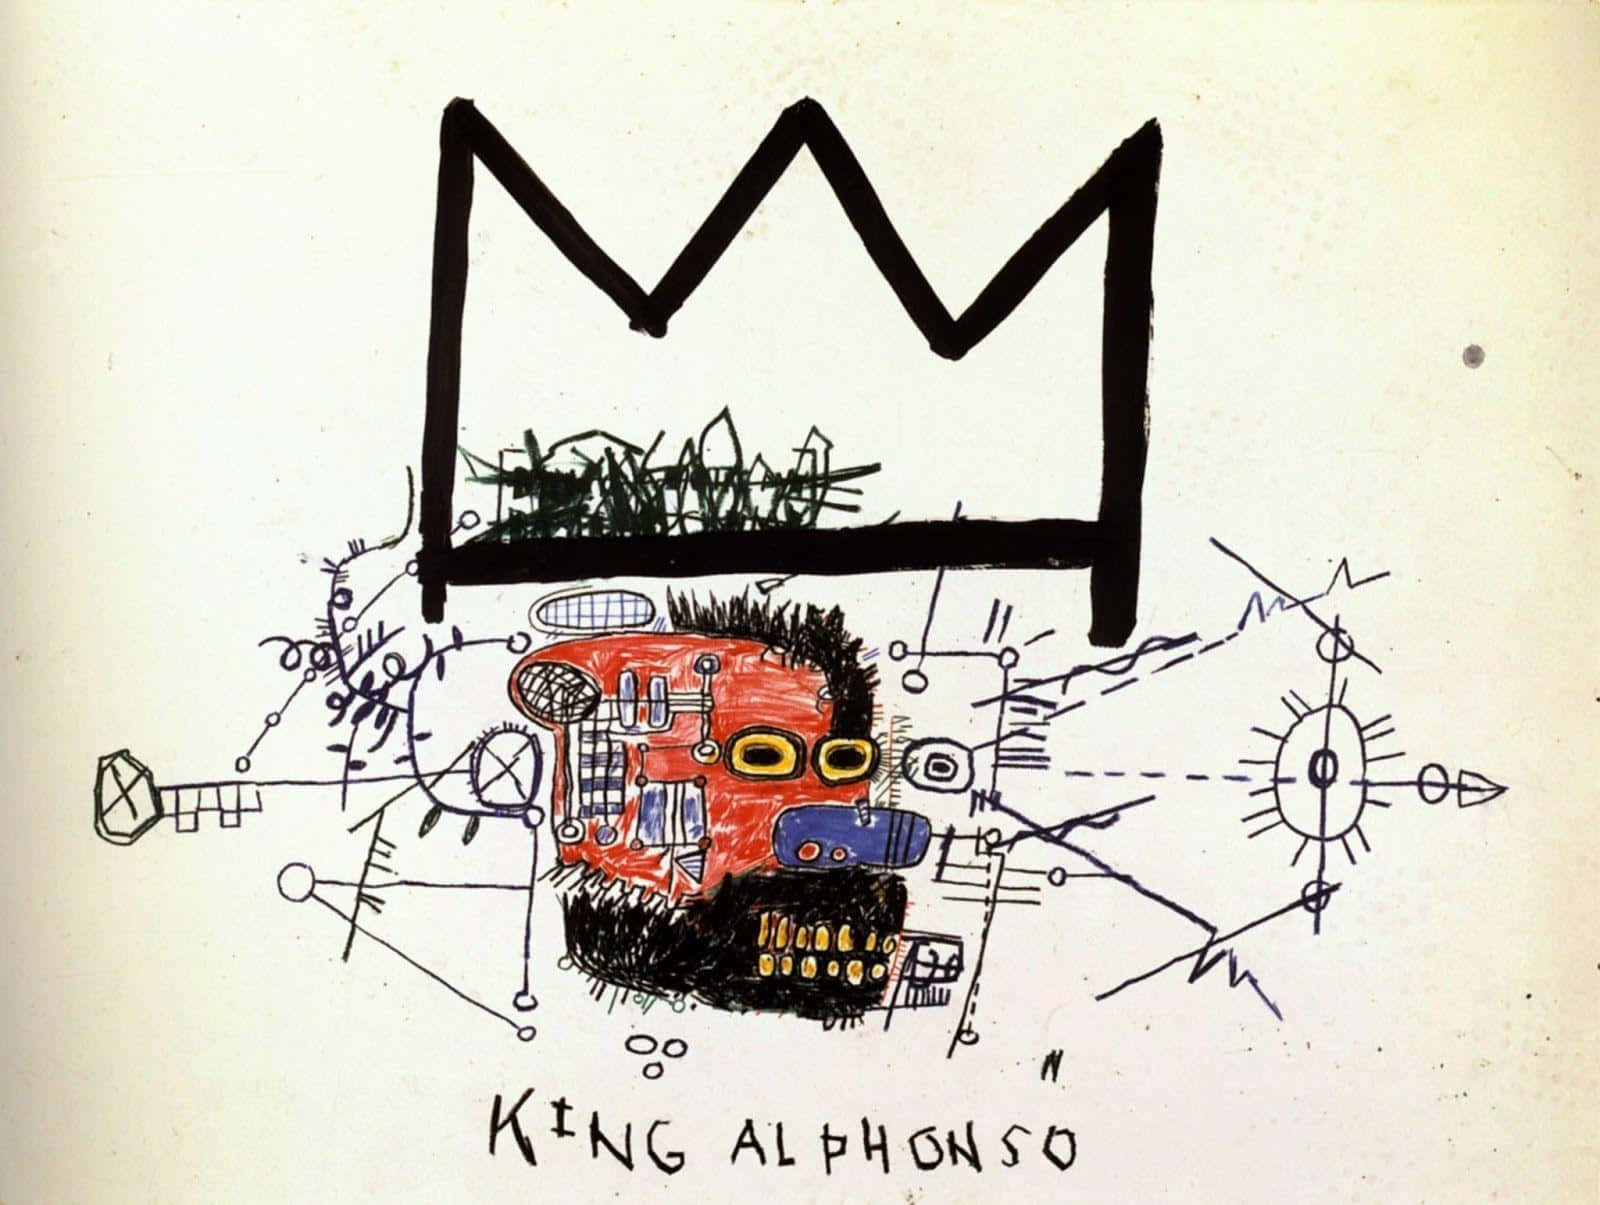 Jeanmichel Basquiat, Mästaren Av Neo-expressionismen. Wallpaper